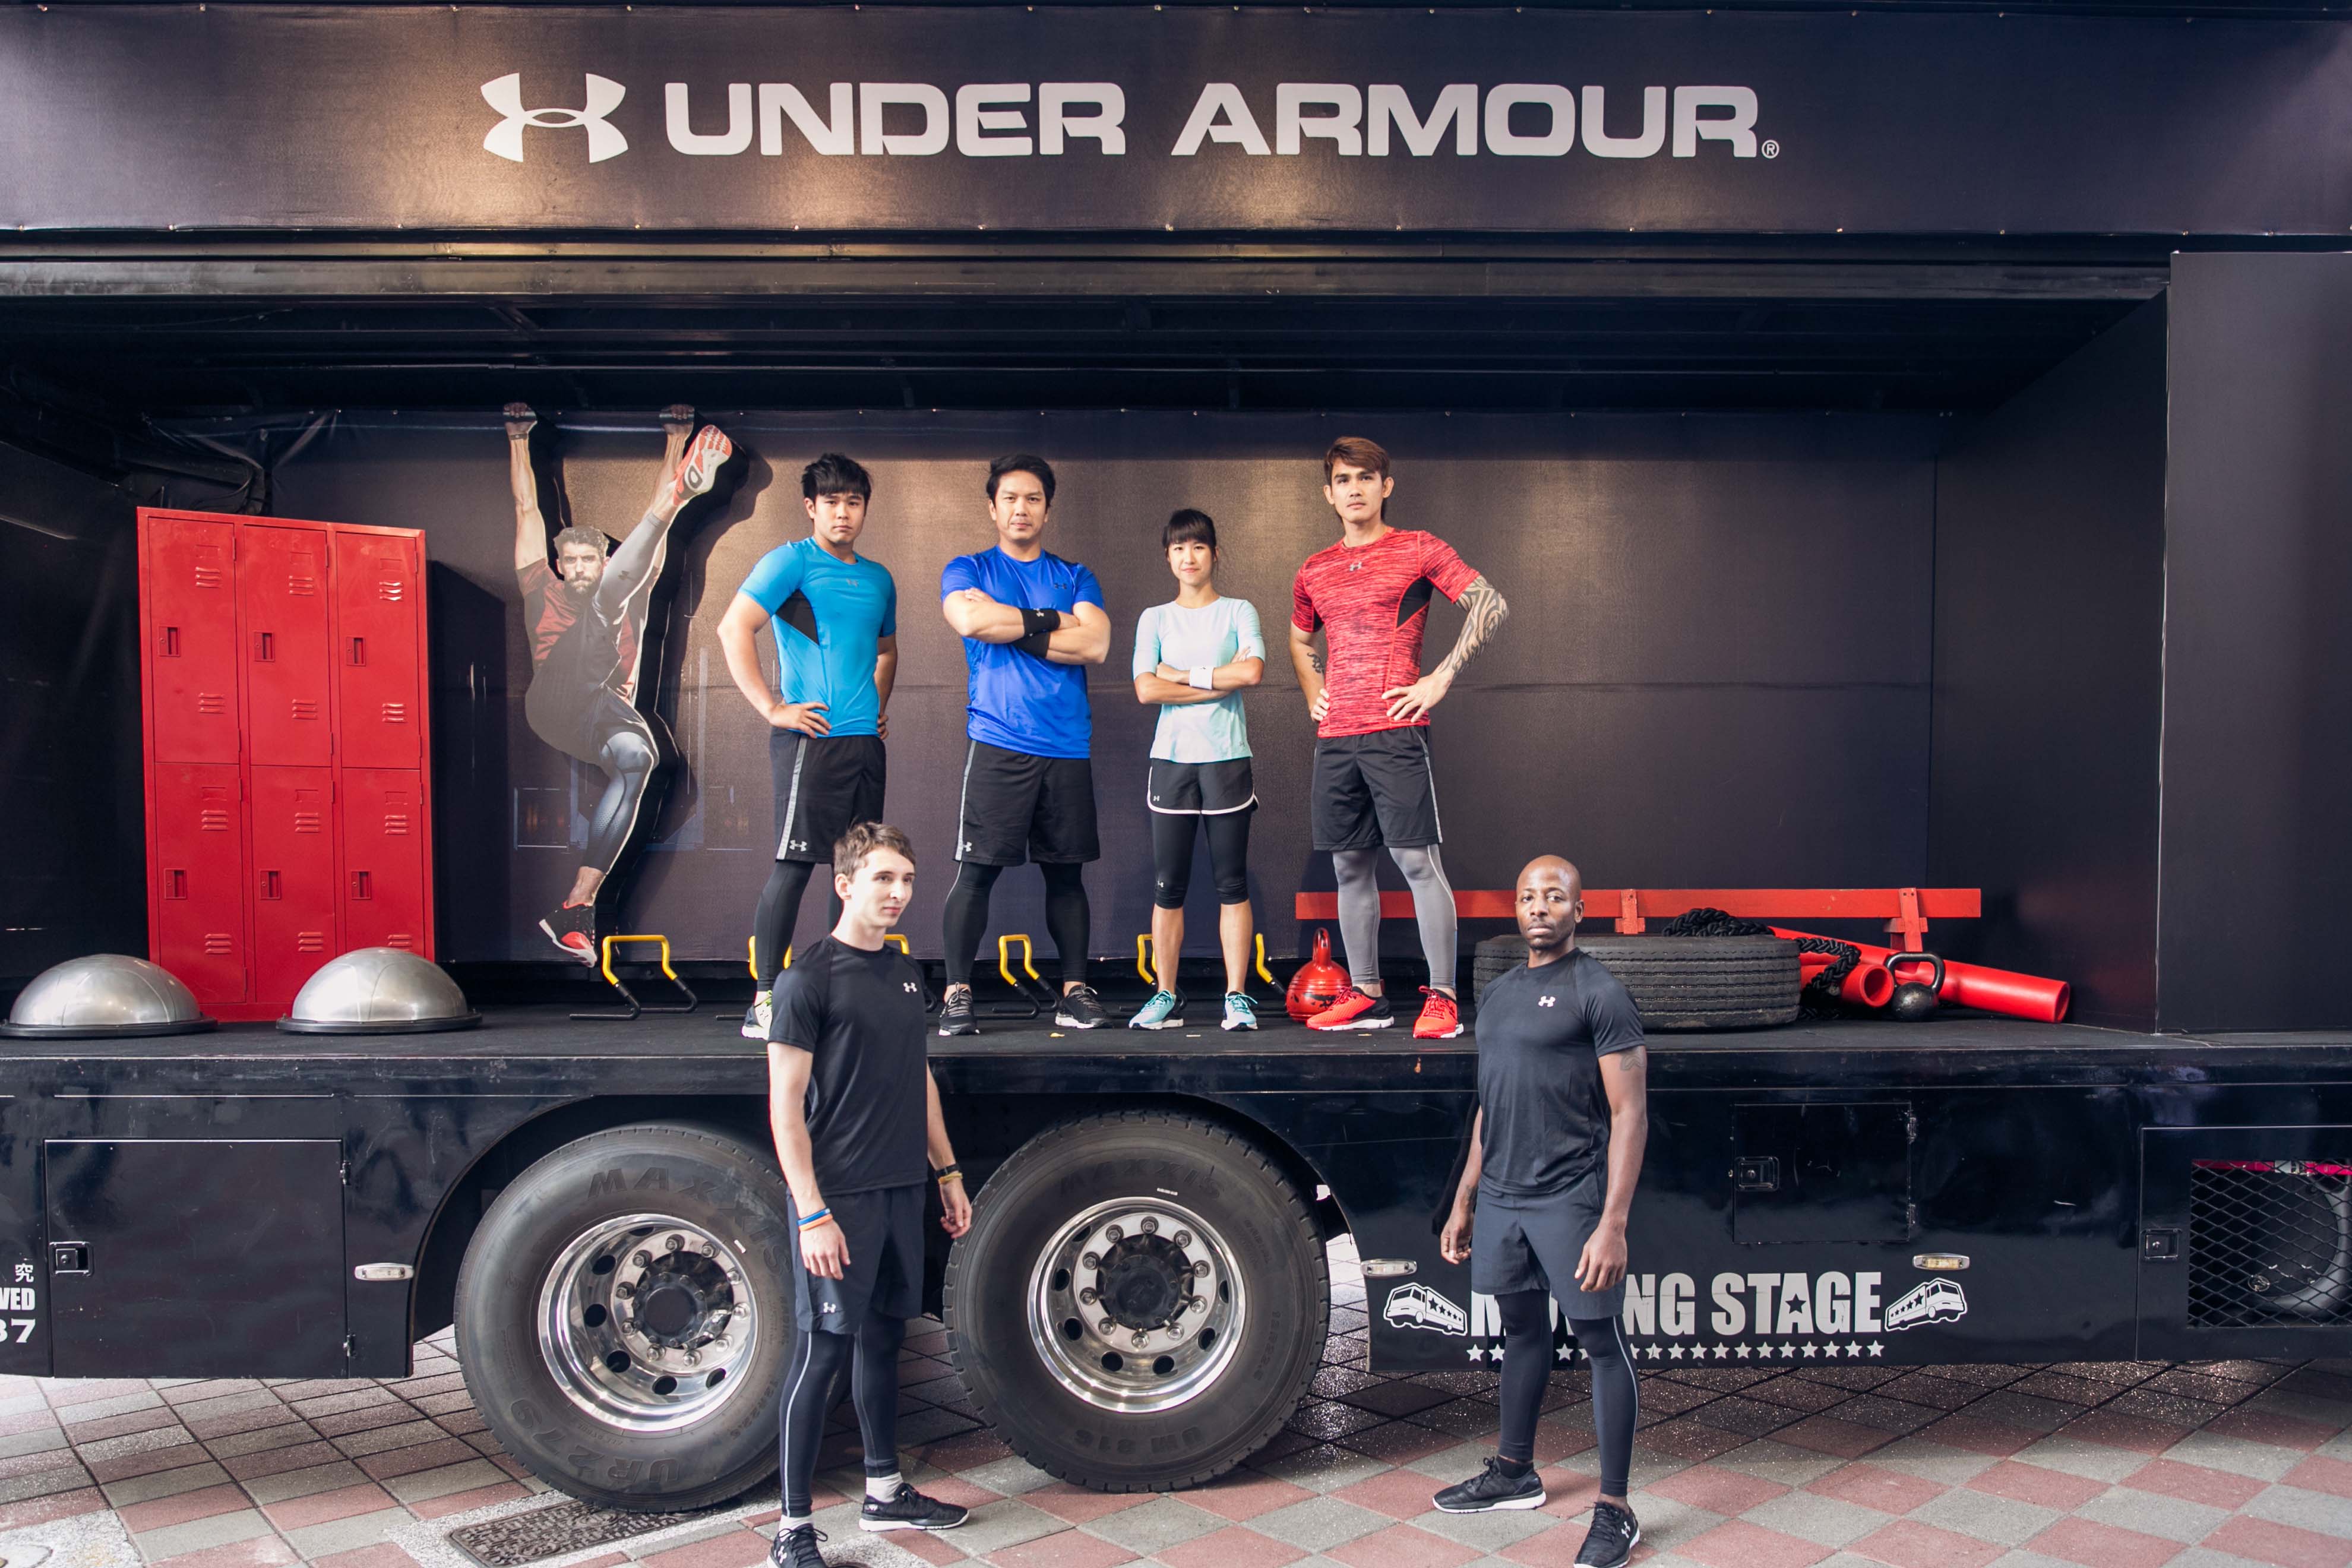 UNDER ARMOUR 行動健身車首度亮相 四位運動選手搶先體驗